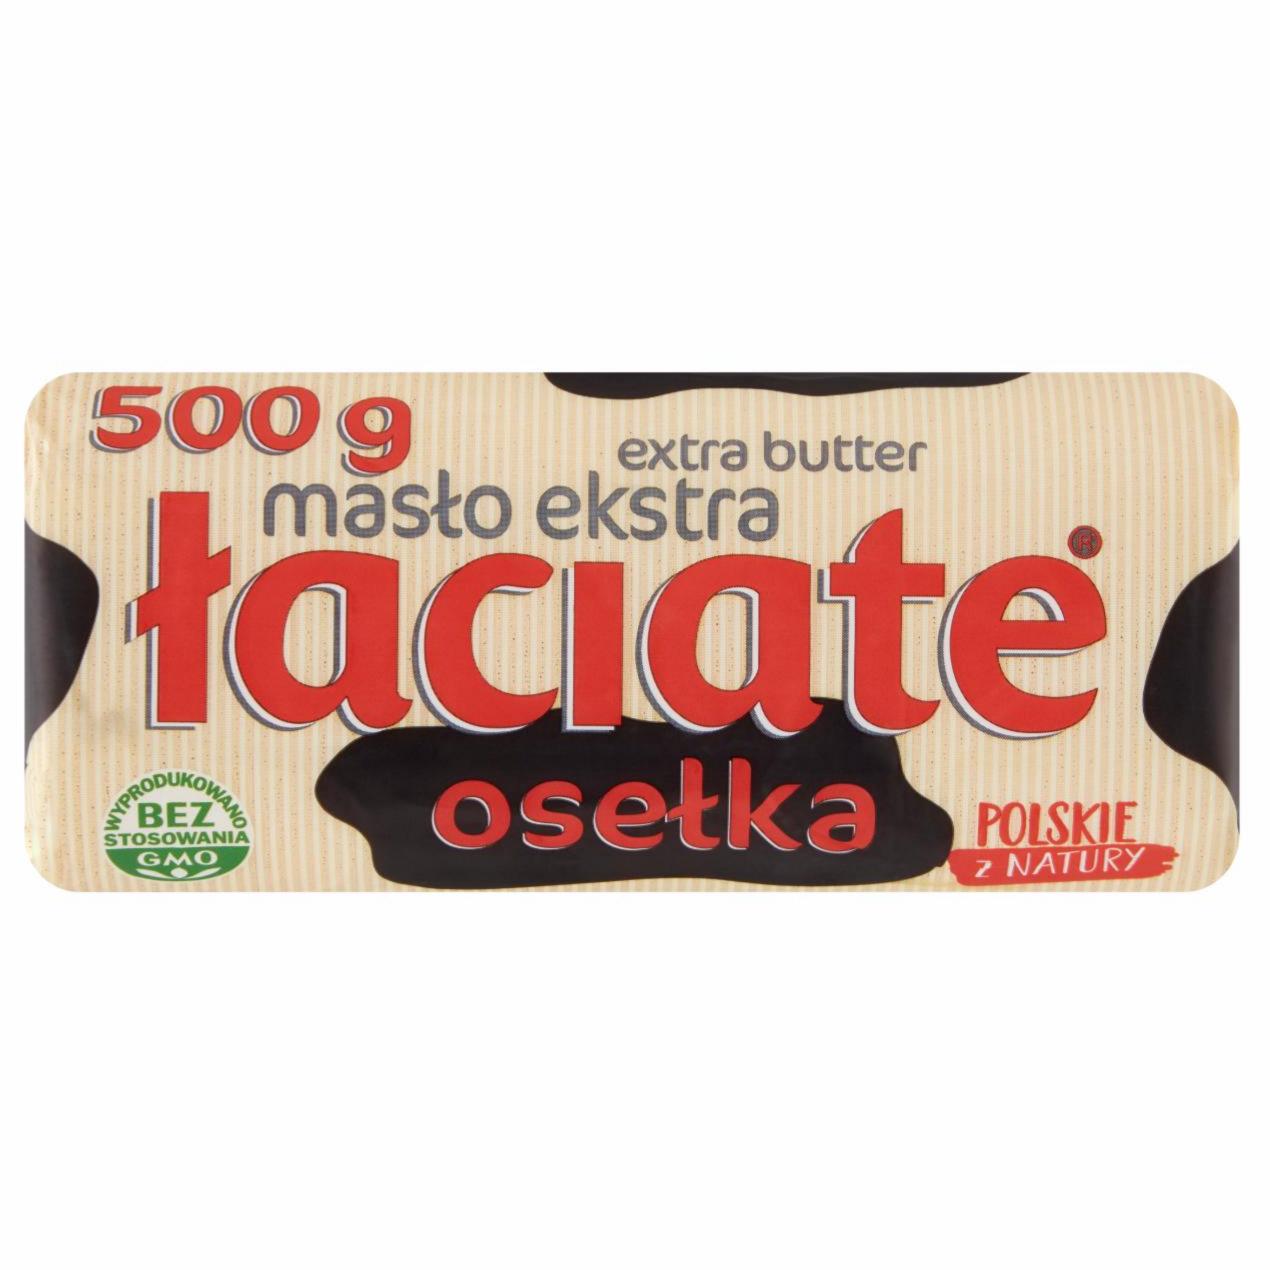 Photo - Łaciate Osełka Extra Butter 500 g